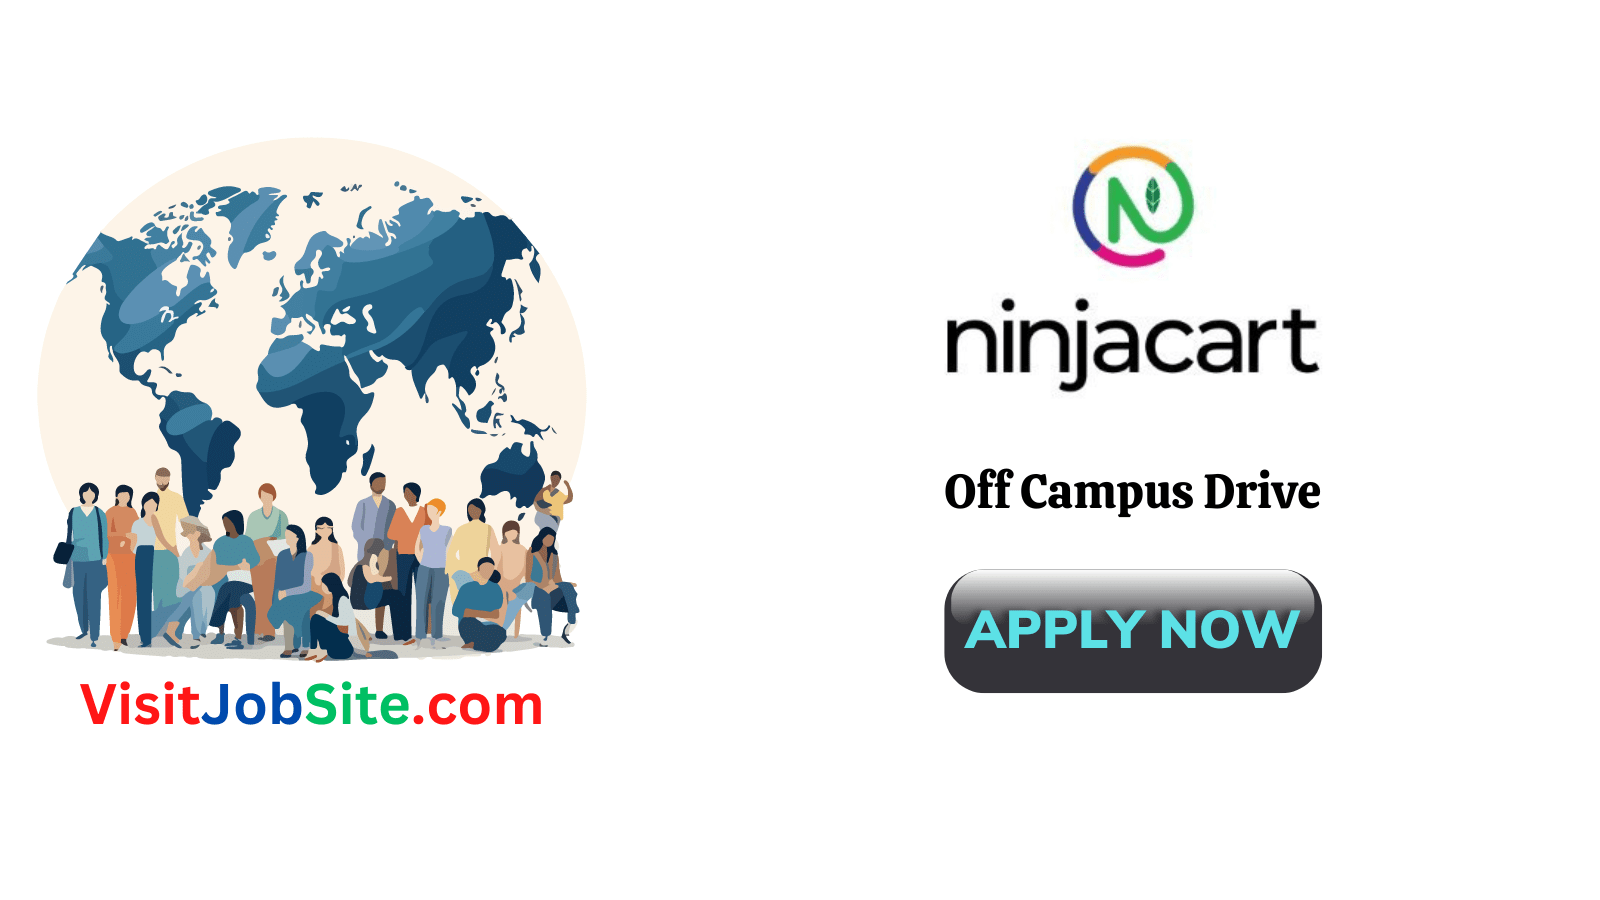 ninjacart Off Campus Drive